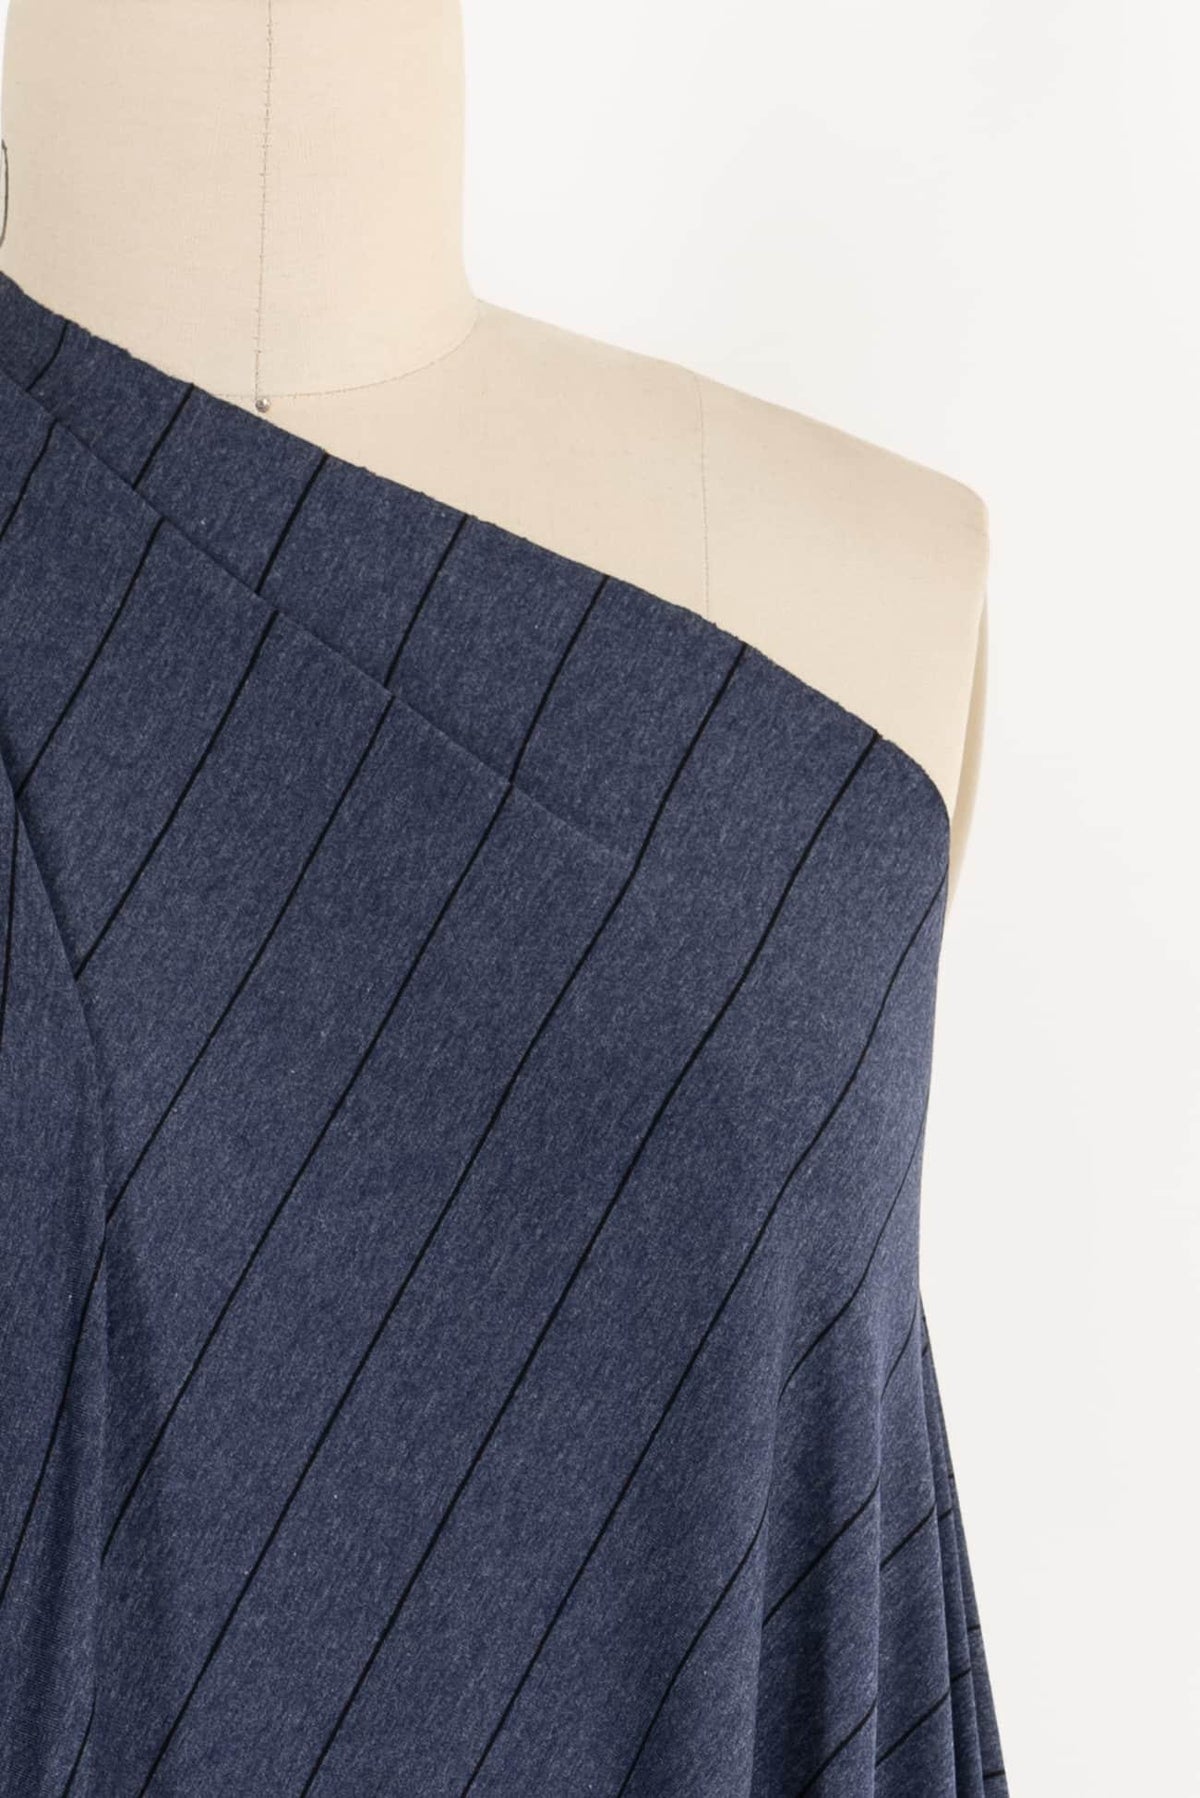 Cable Car Stripe USA Knit - Marcy Tilton Fabrics